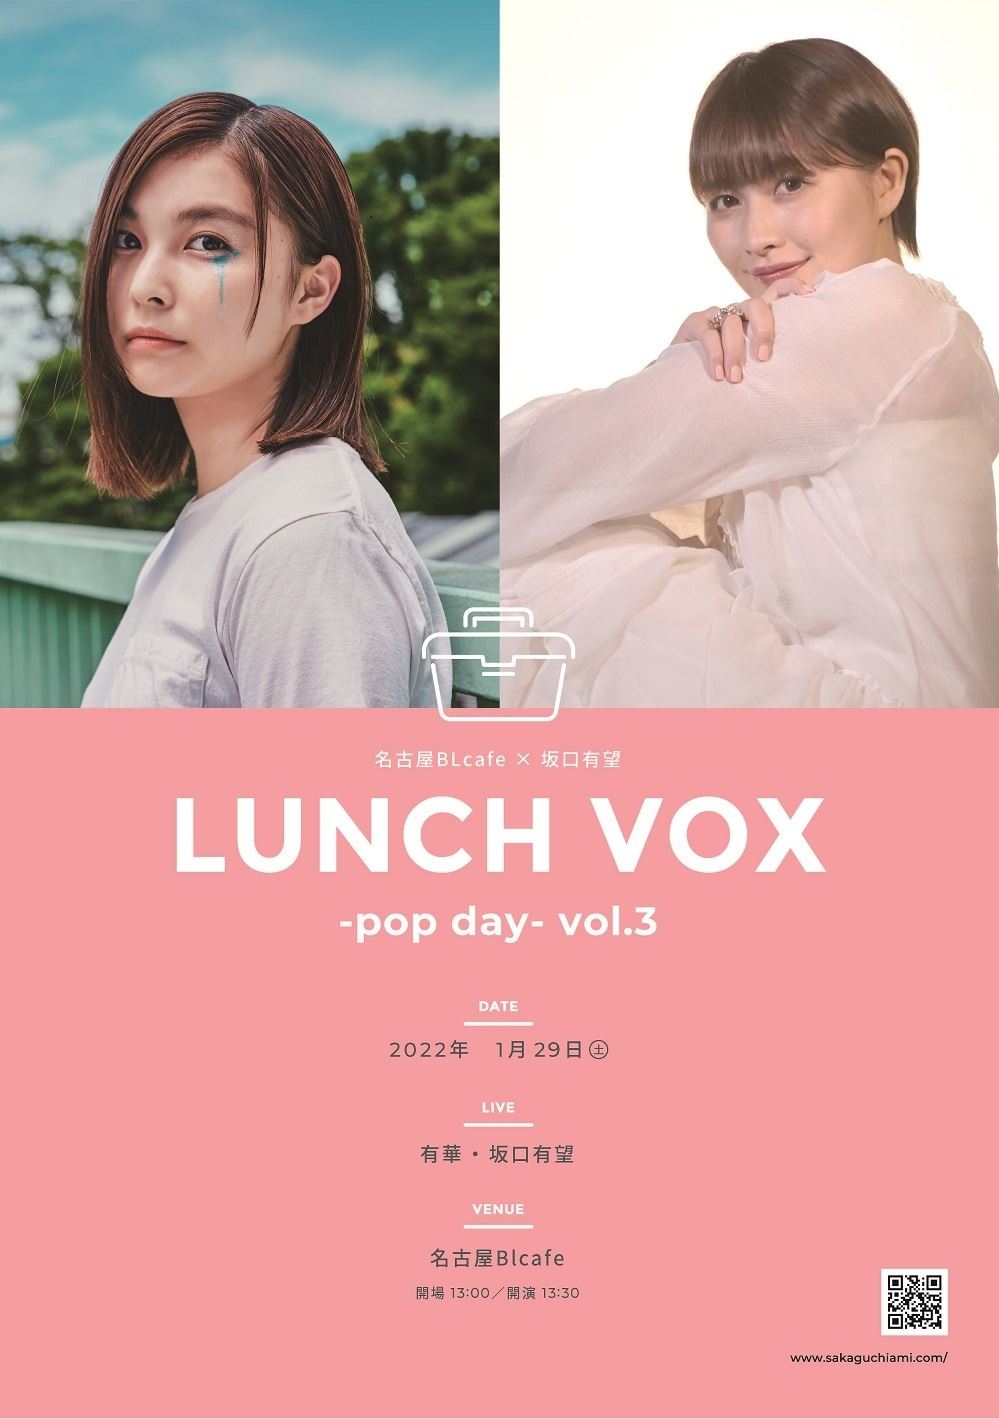 坂口有望『LUNCH VOX -pop day- vol.3』告知画像